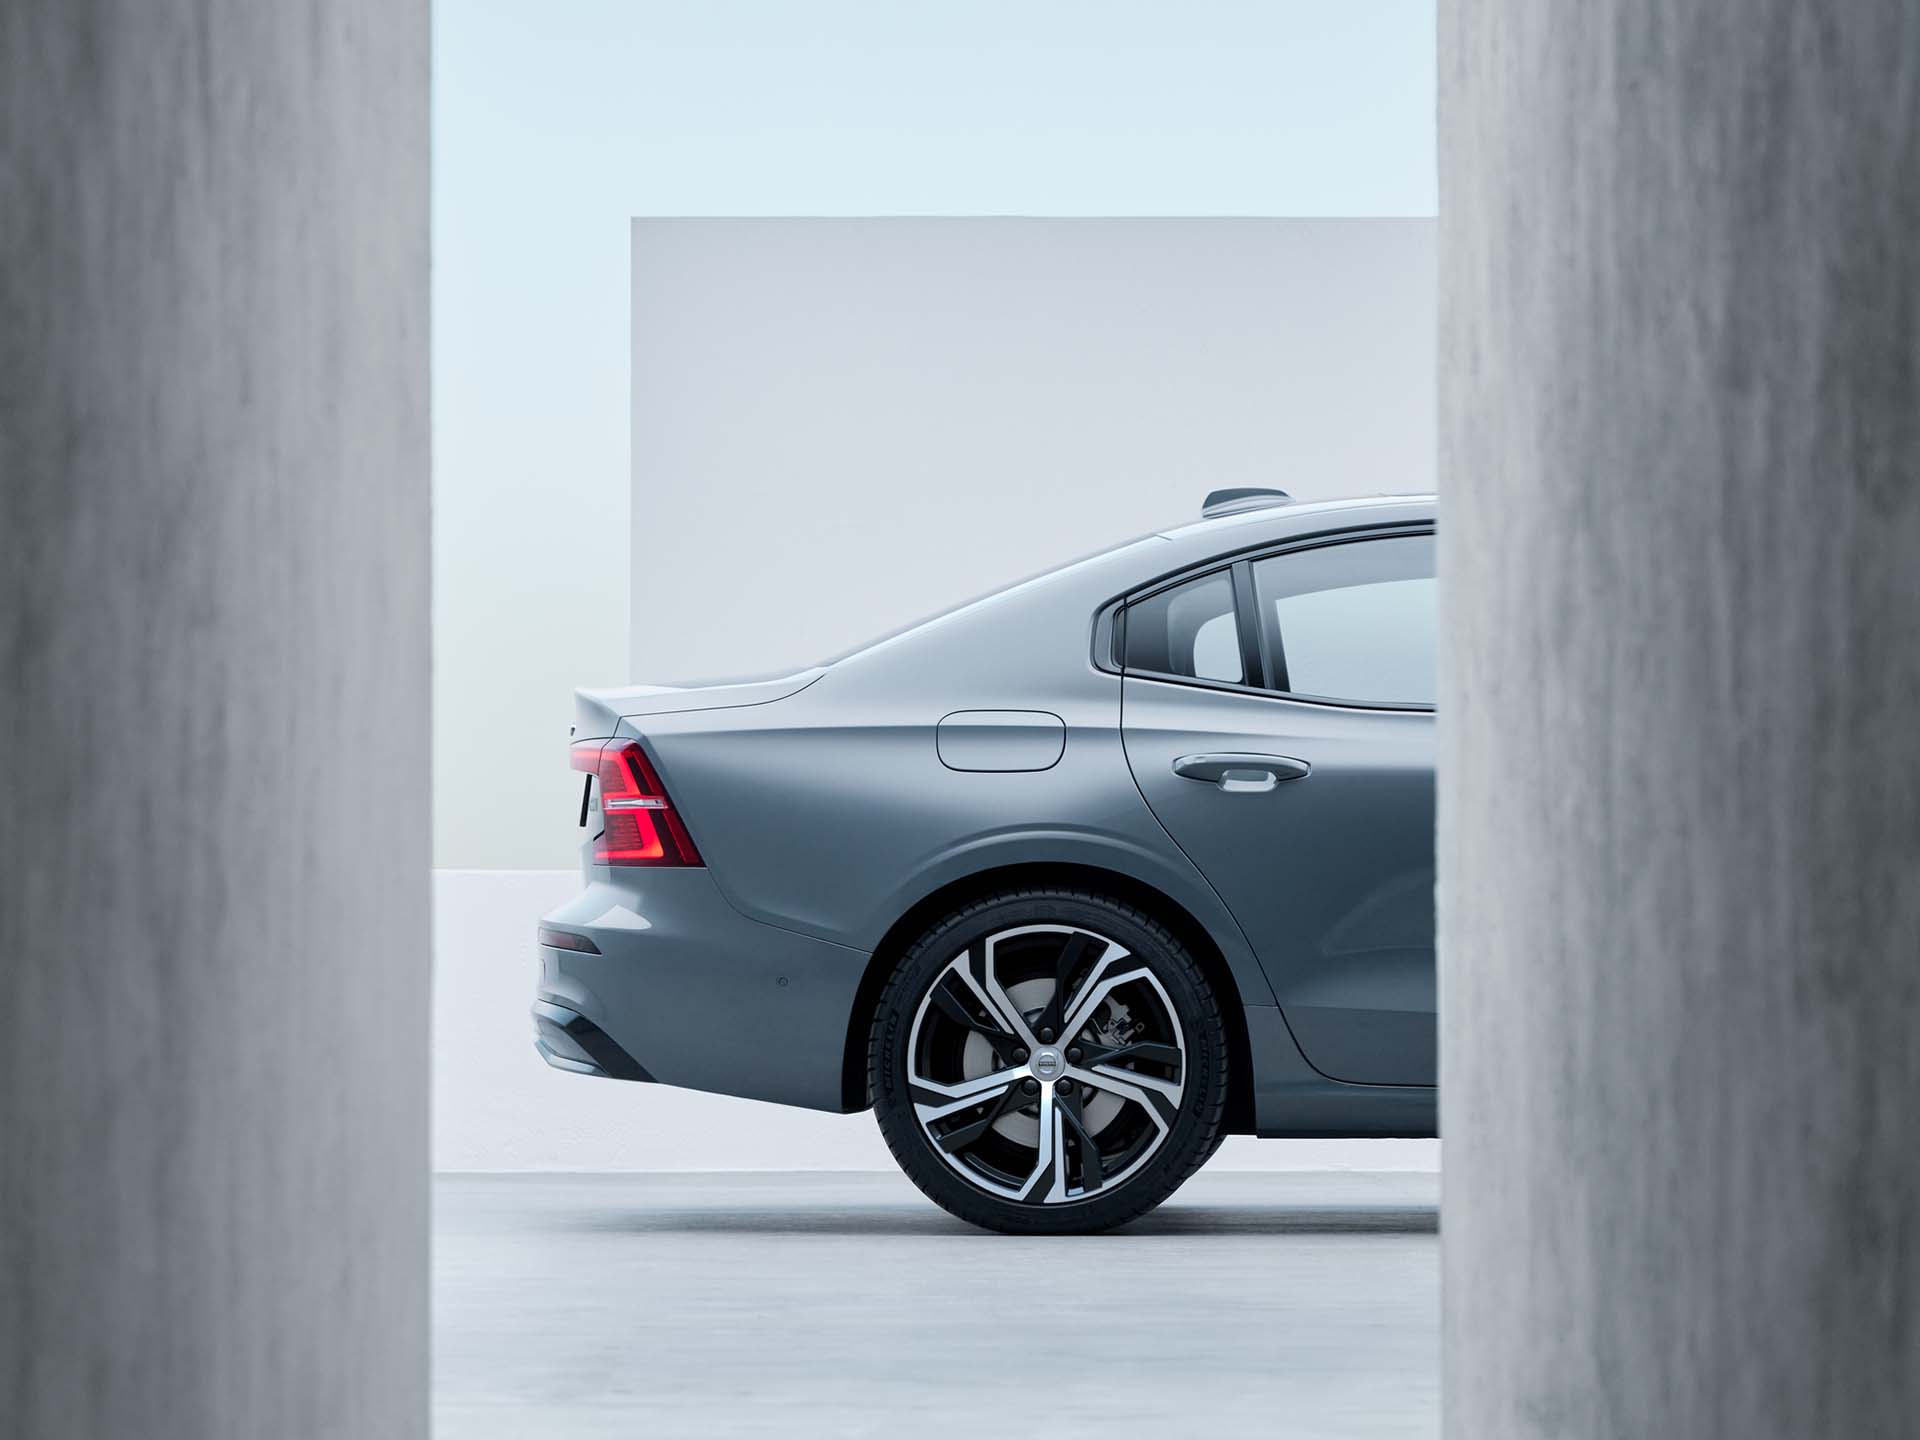 New aerodynamic wheel design on the Volvo S60 Recharge.